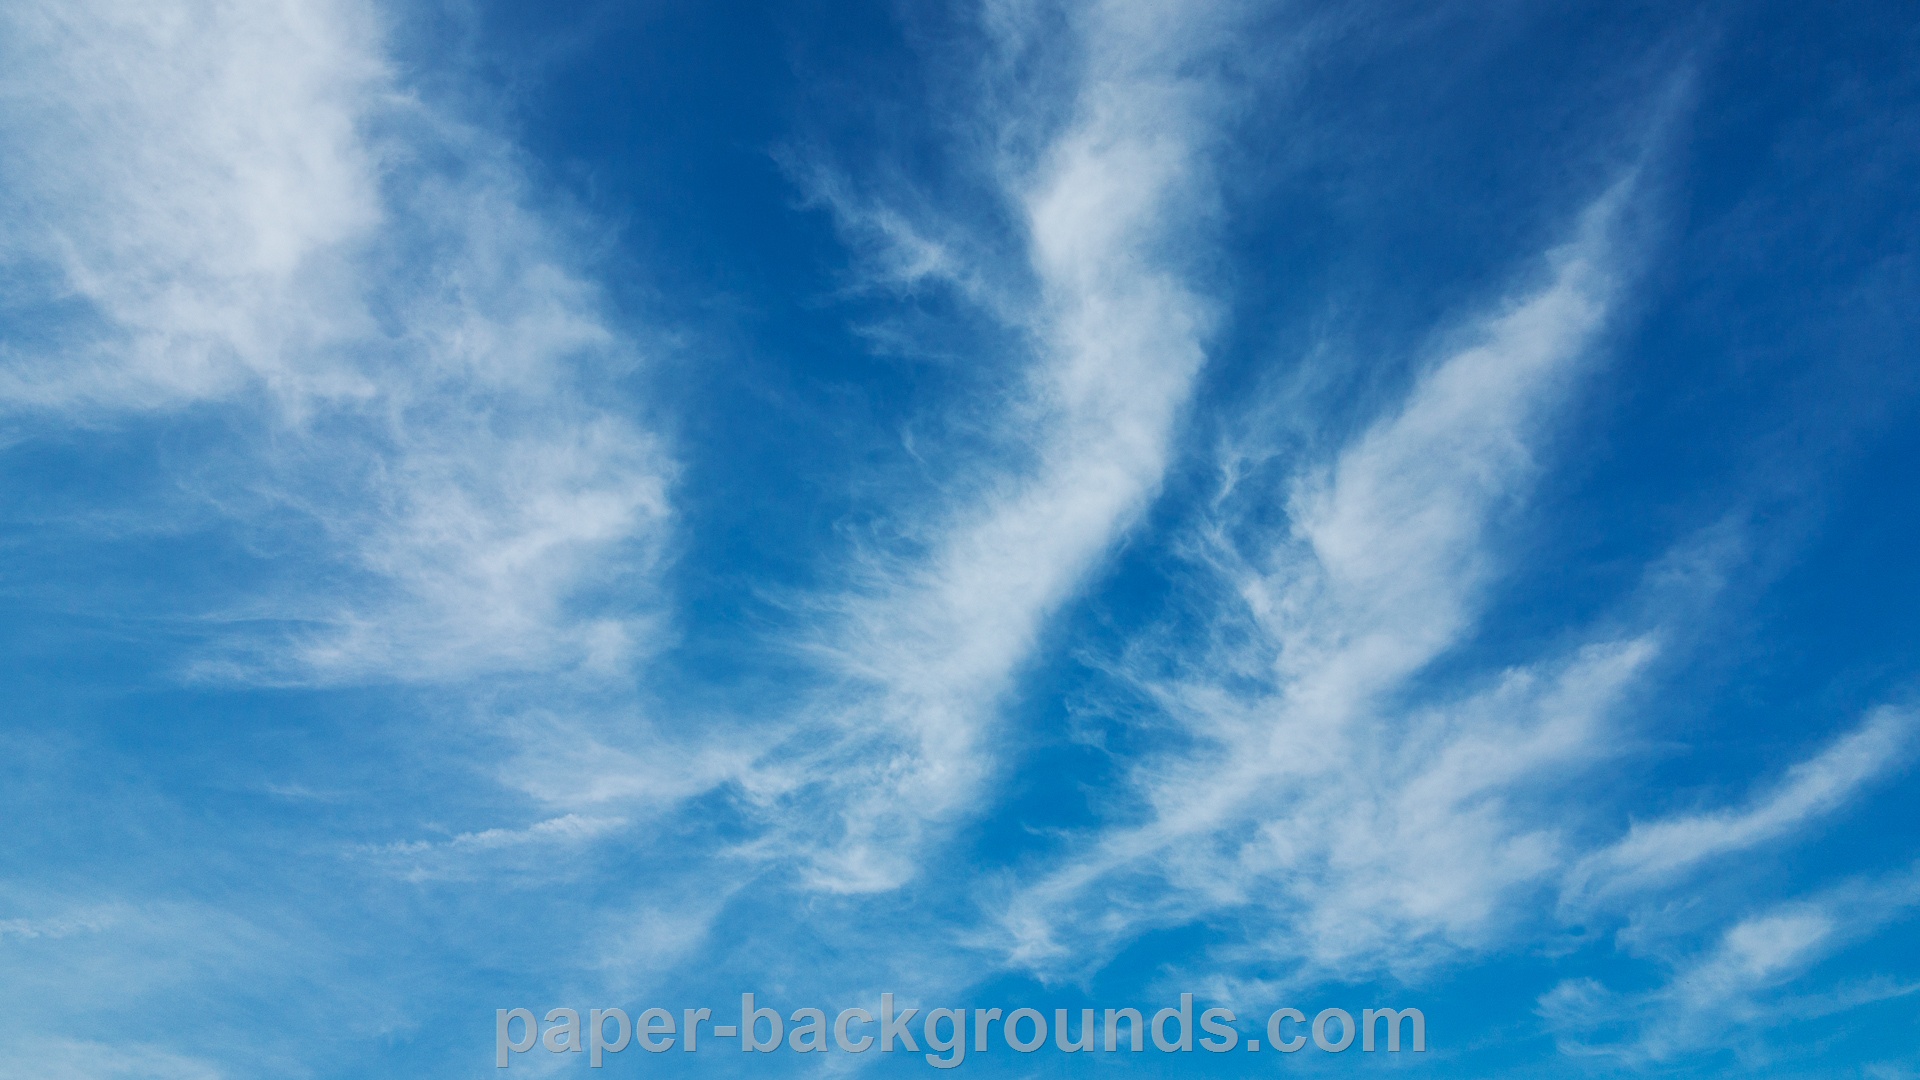 Background Wallpaper Sky Sparkle Nature Clouds Blue TextureImage